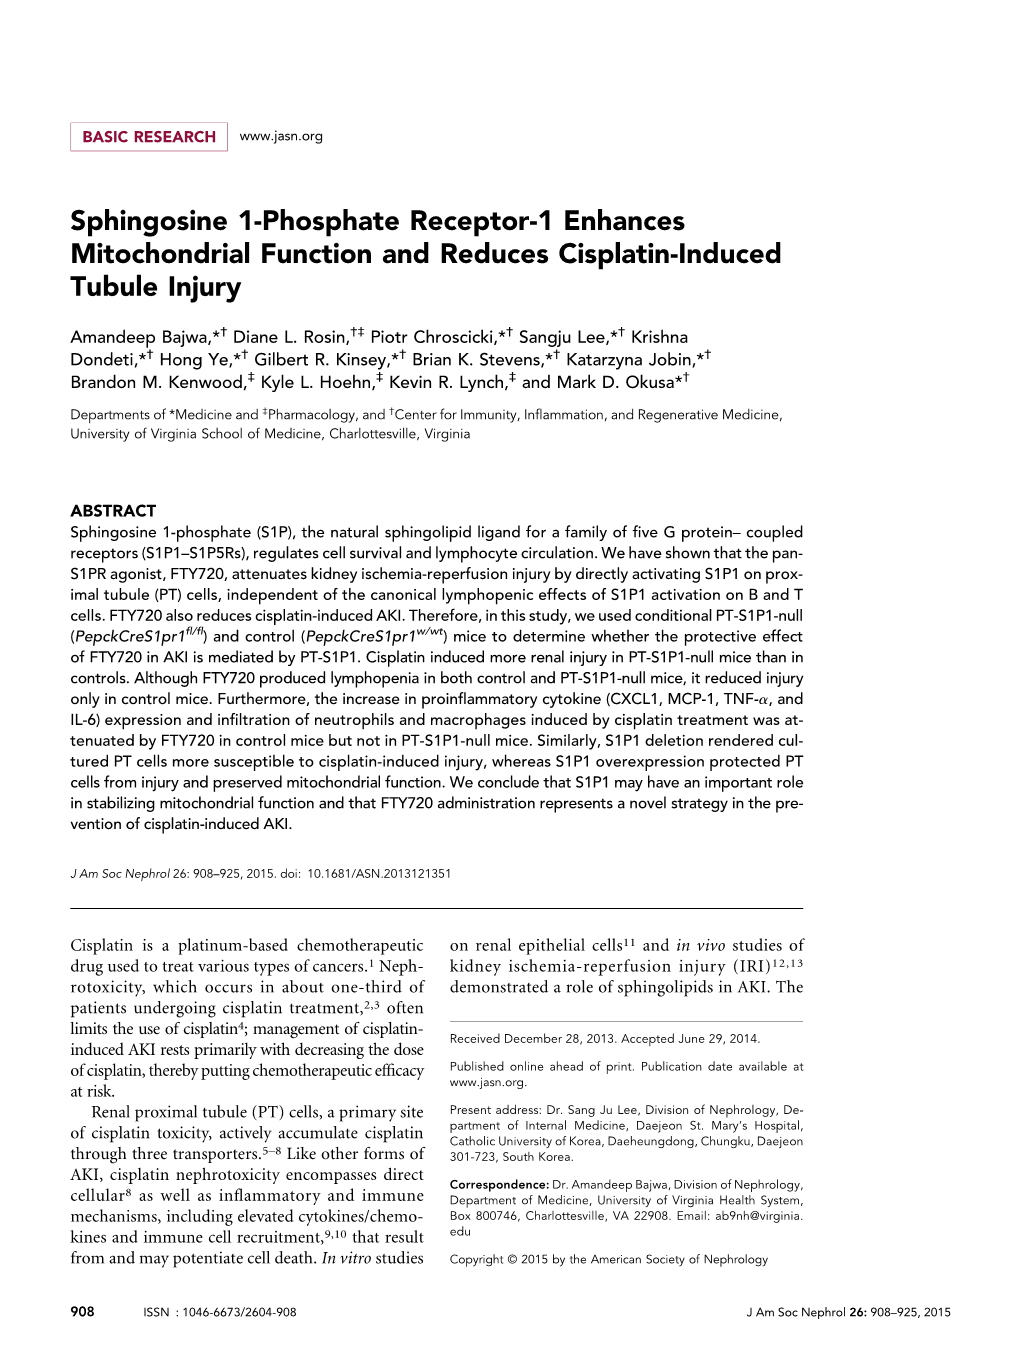 Sphingosine 1-Phosphate Receptor-1 Enhances Mitochondrial Function and Reduces Cisplatin-Induced Tubule Injury